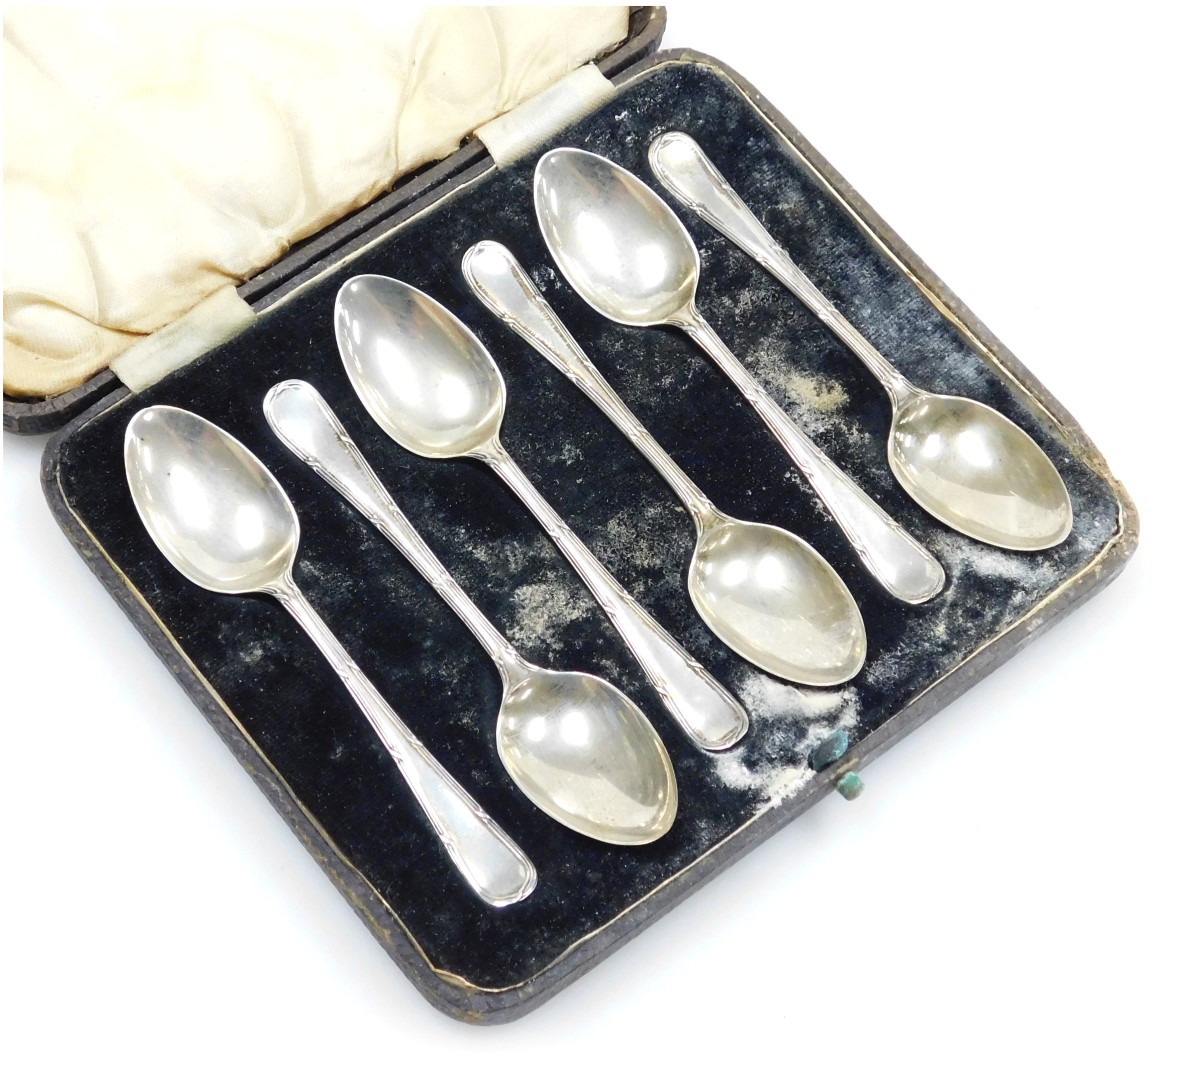 A set of six George VI coffee spoons, cased, Sheffield 1940, 1.80oz.